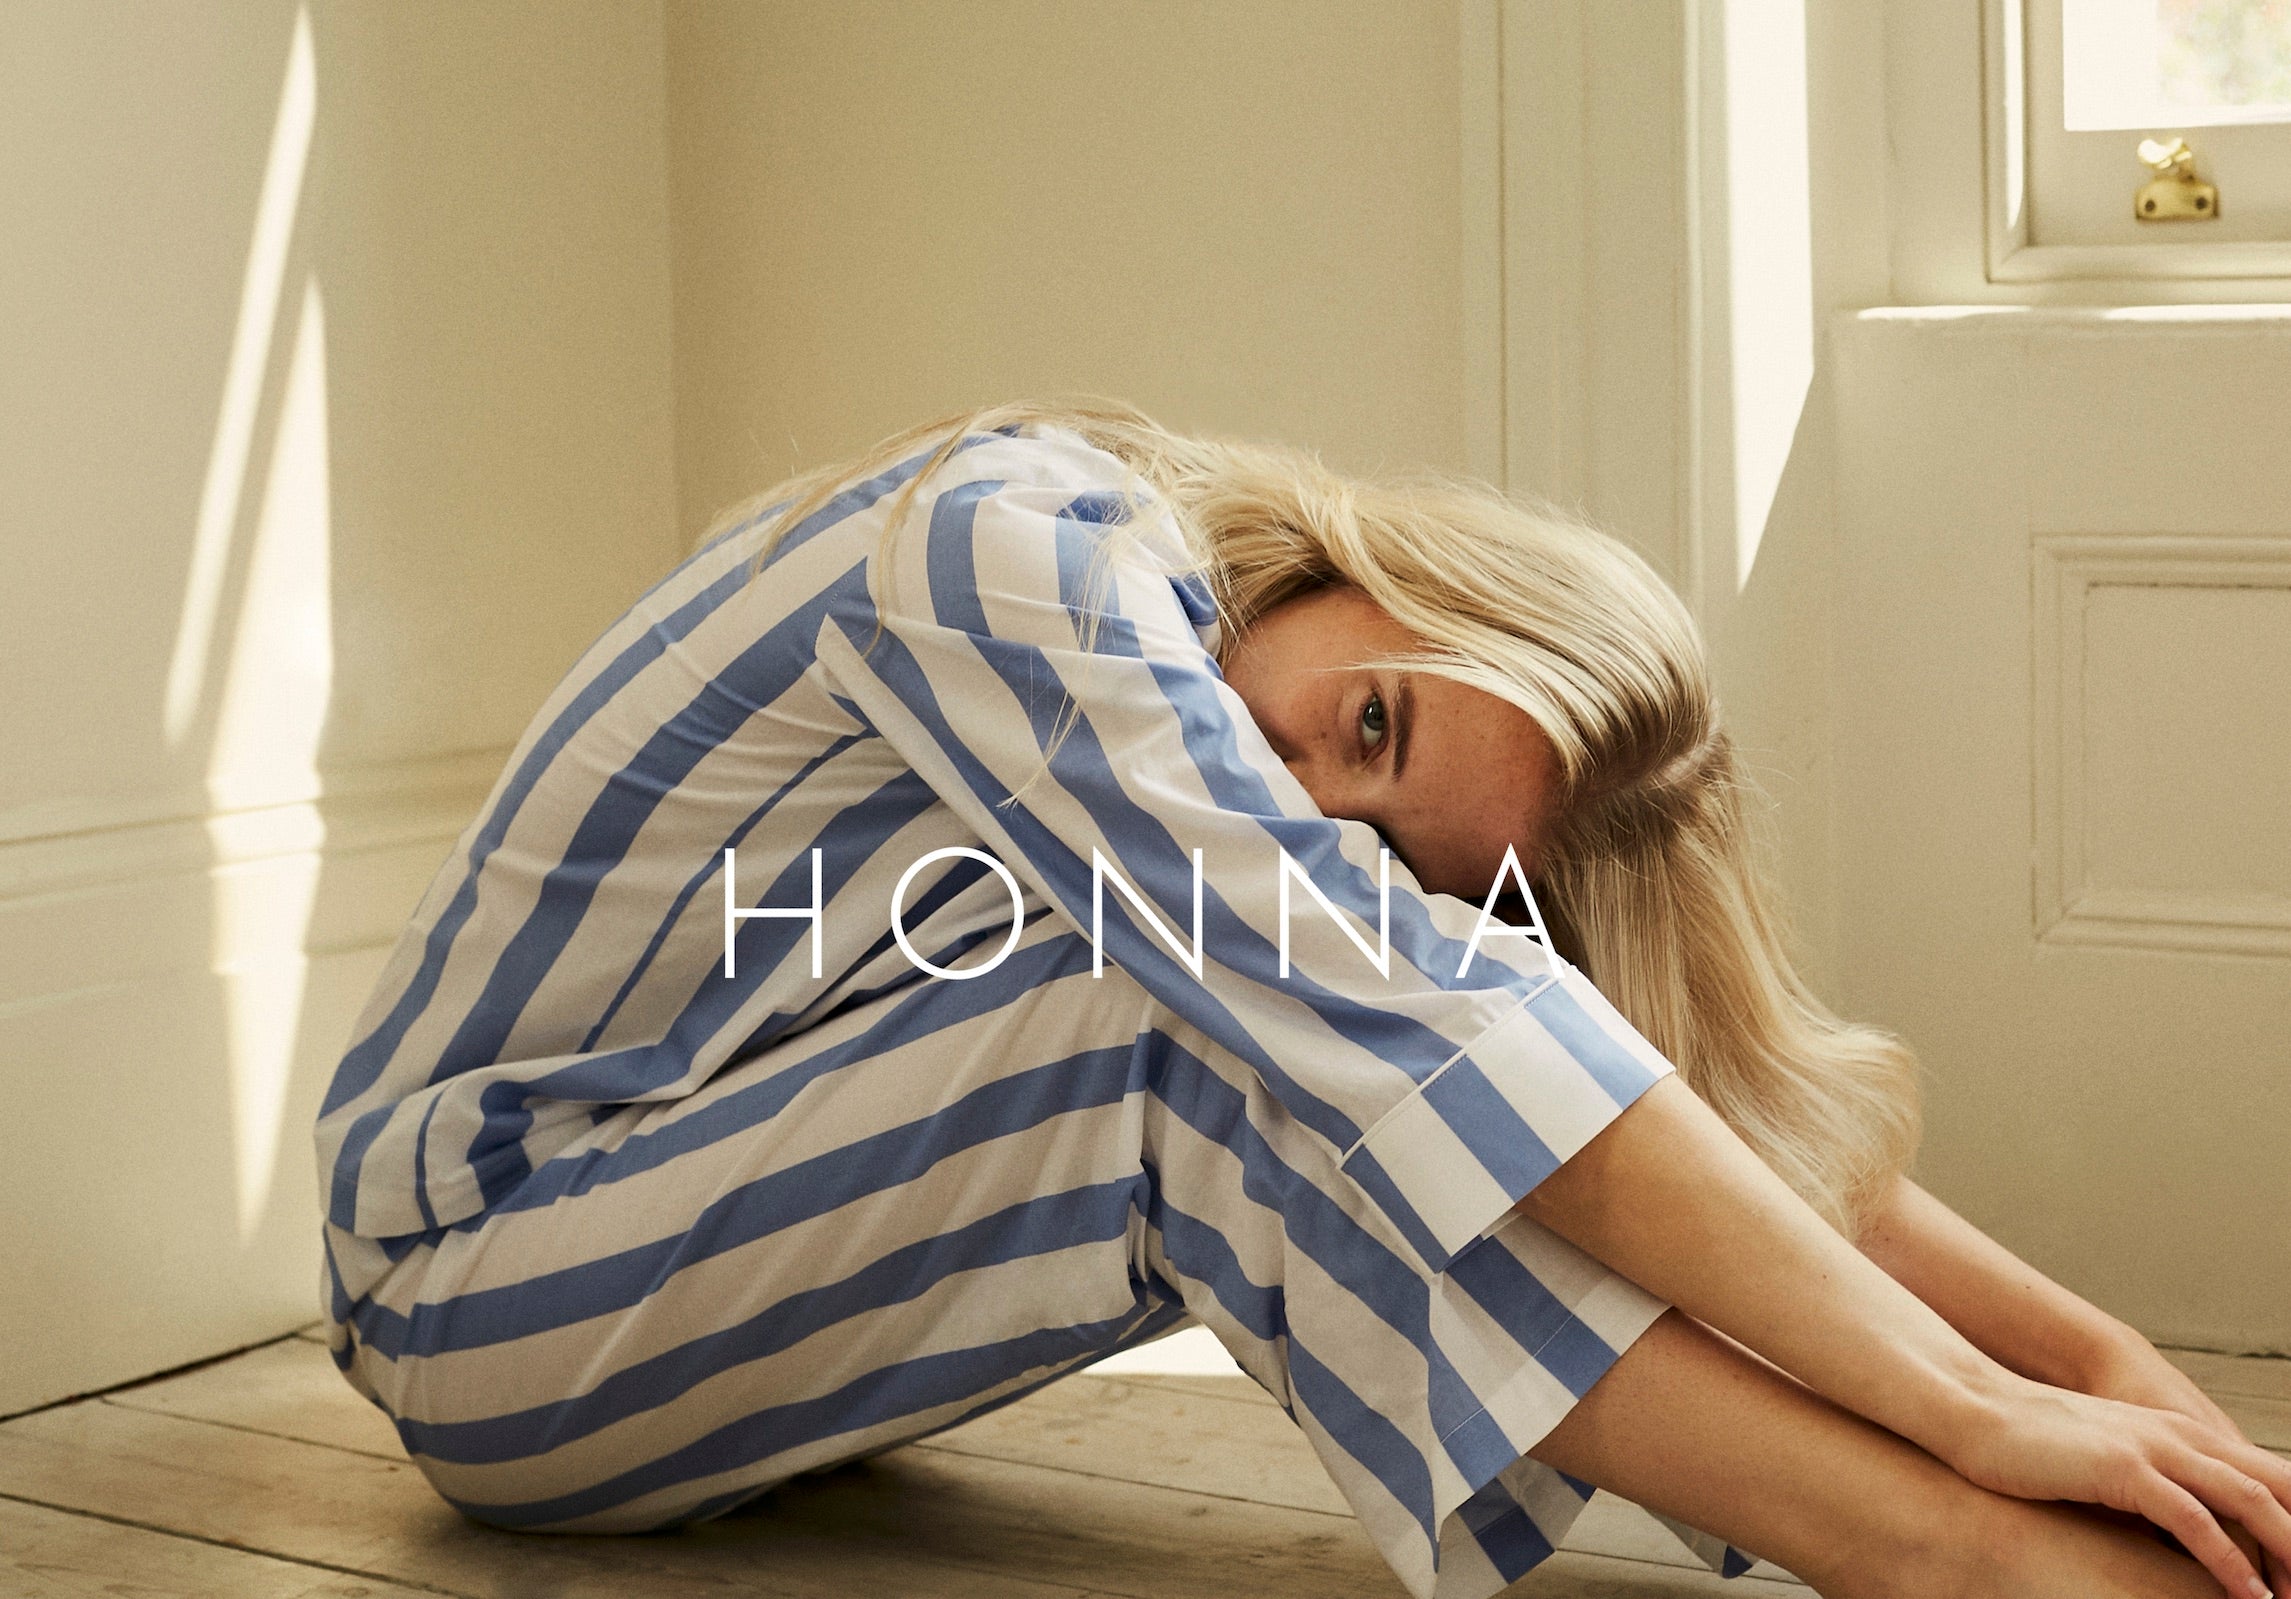 HONNA Gift Card - Gift Cards for HONNA Sleepwear